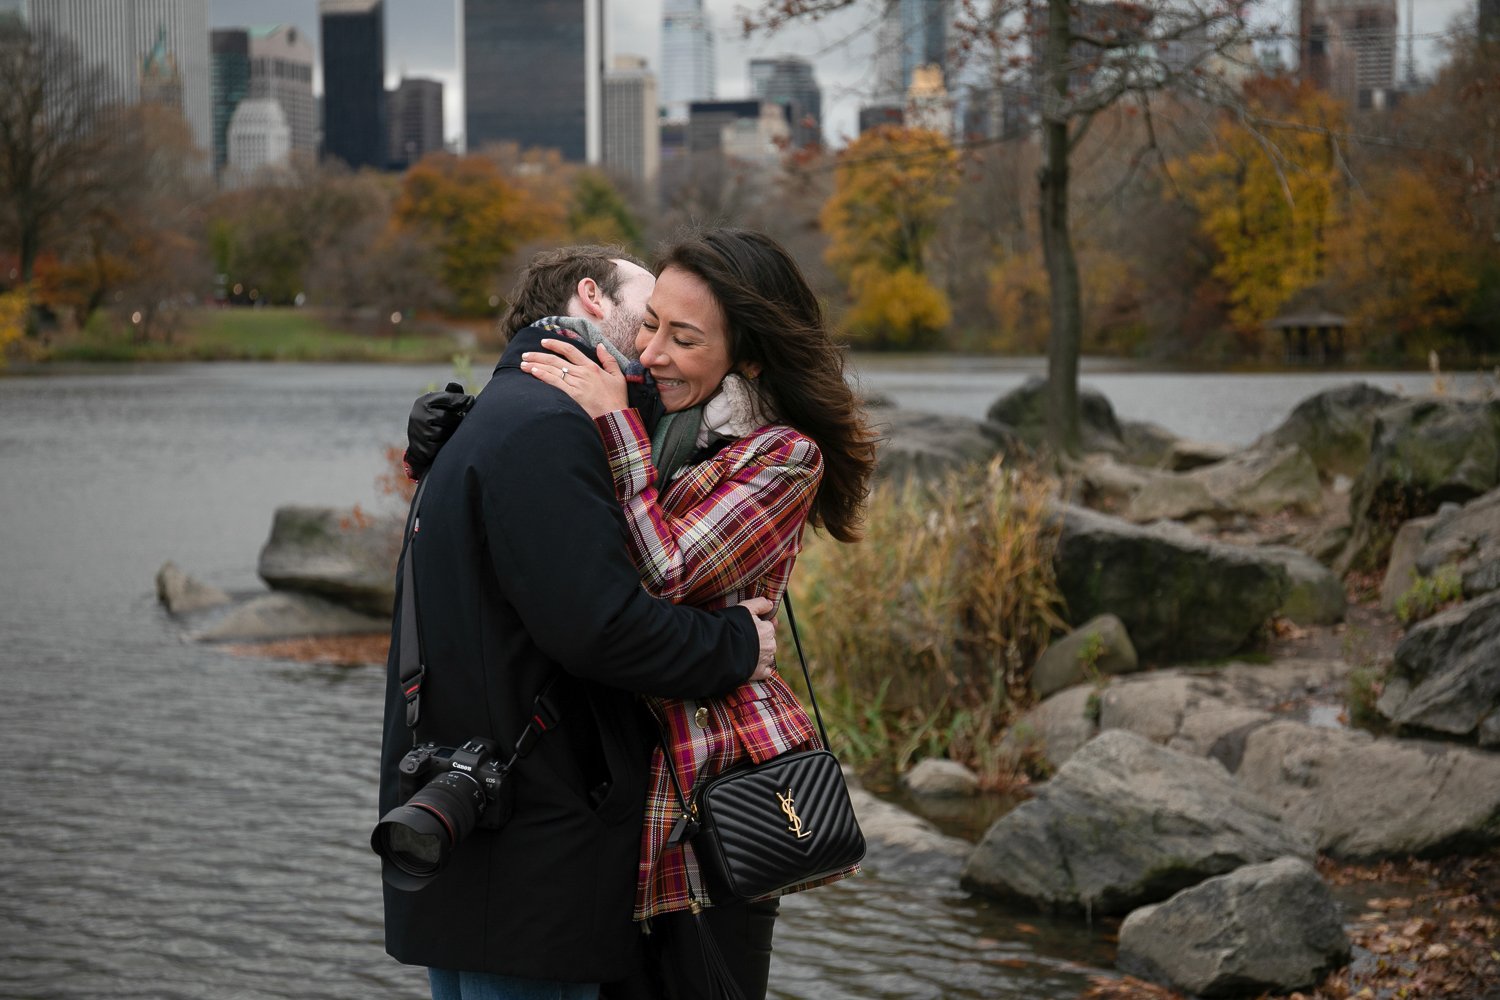 Central Park NYC Proposal Photographer _ Jonathan Heisler _11.26.2021 _ 0005.jpg